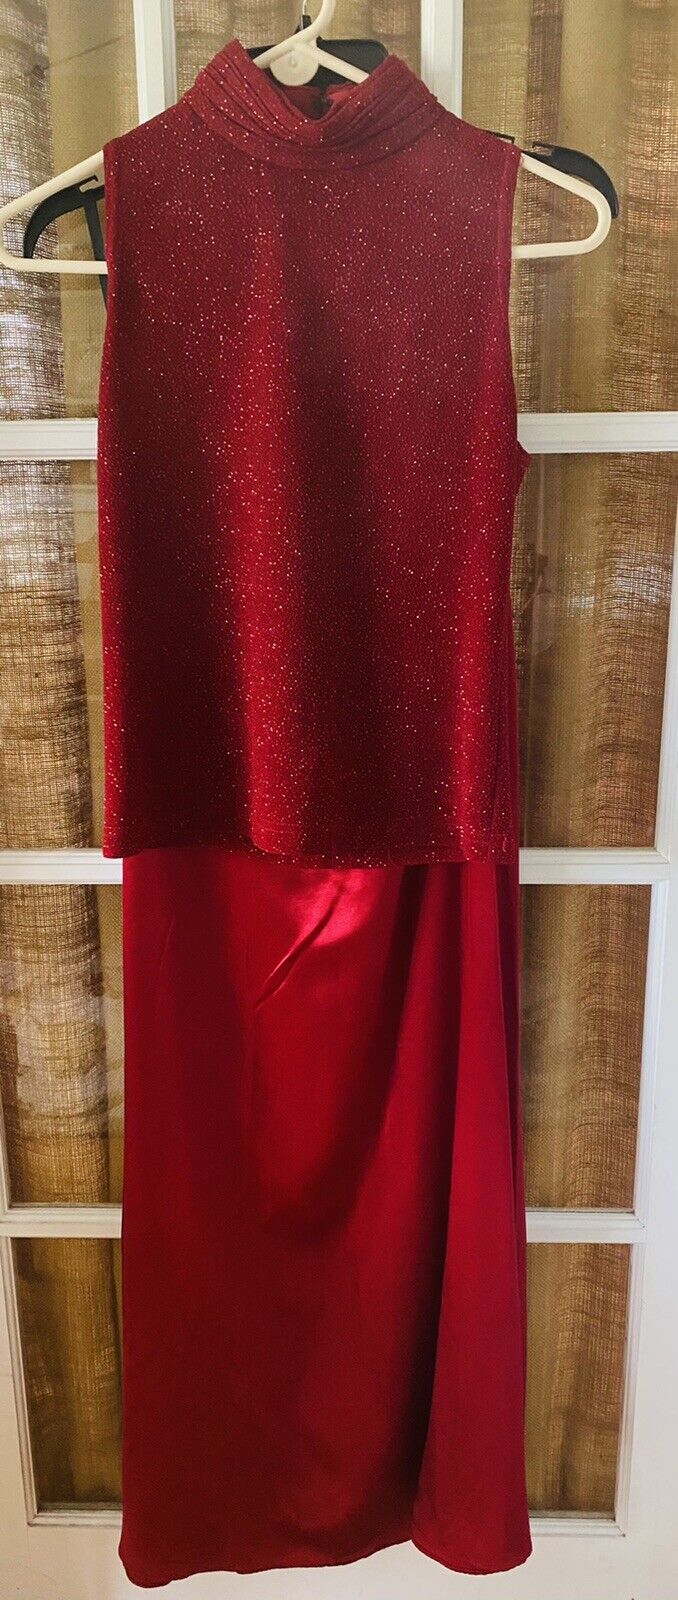 Jeffrey & Dara Holiday Red 2-piece Long Skirt(sz 8) & Sparkly Top (sz 6) Worn 1x